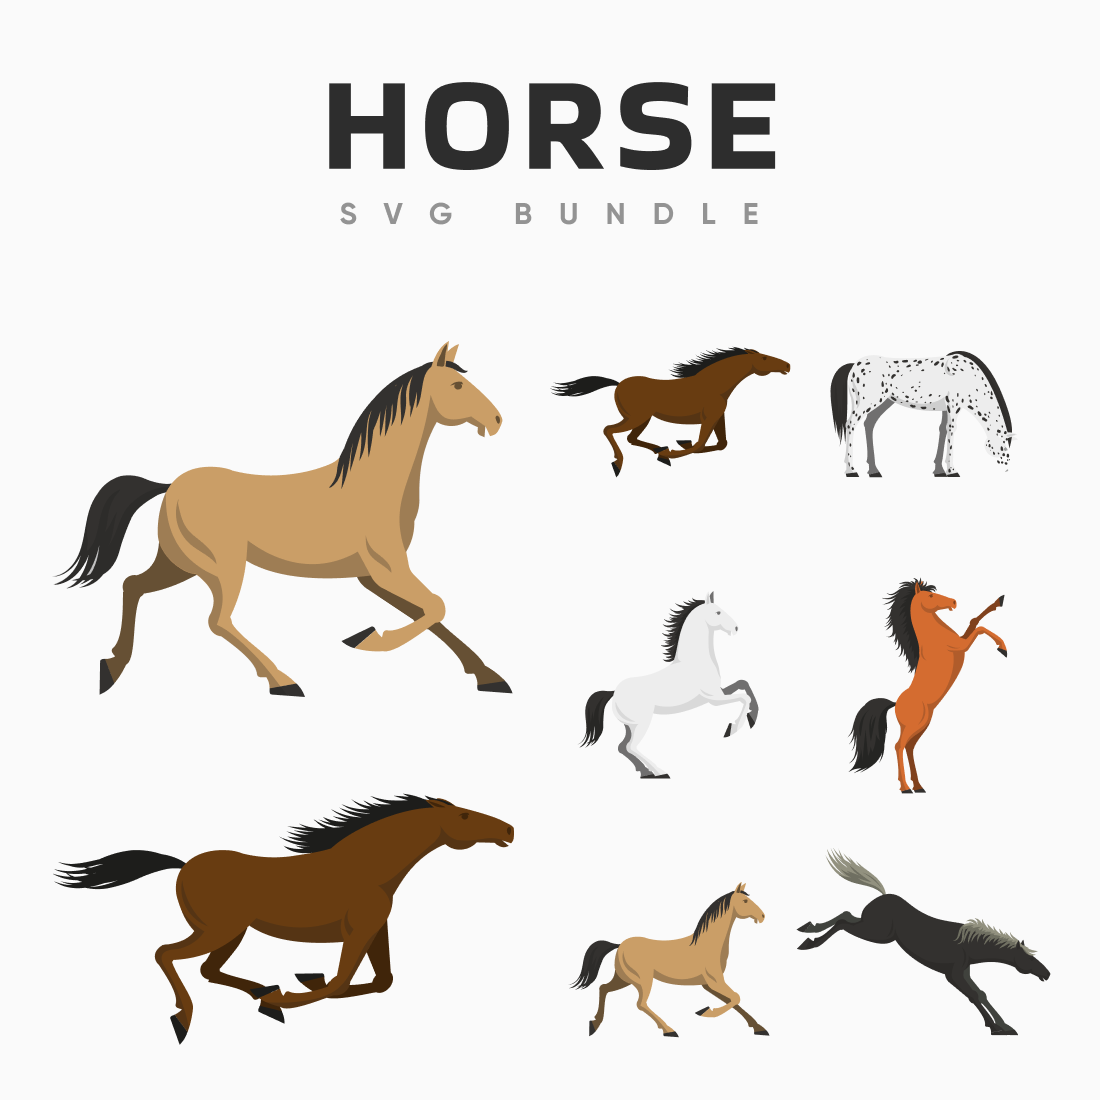 Horse svg bundle main cover.